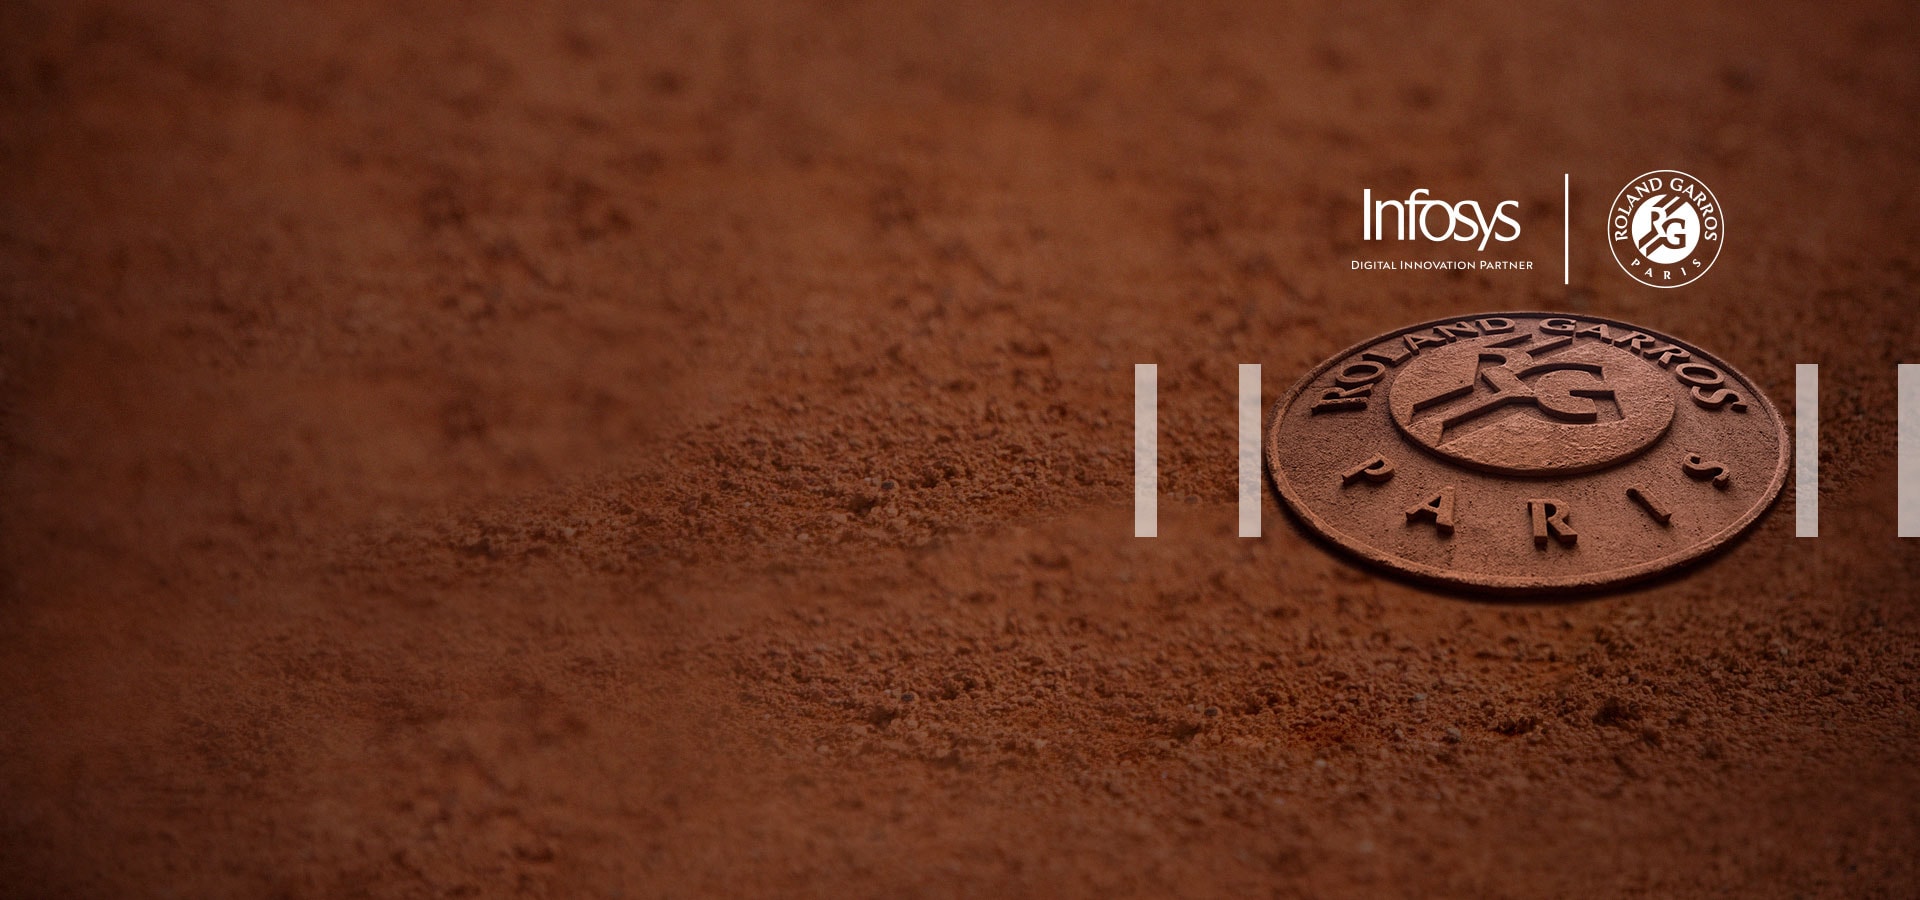 Infosys and Roland-Garros Partner for Digital Innovation